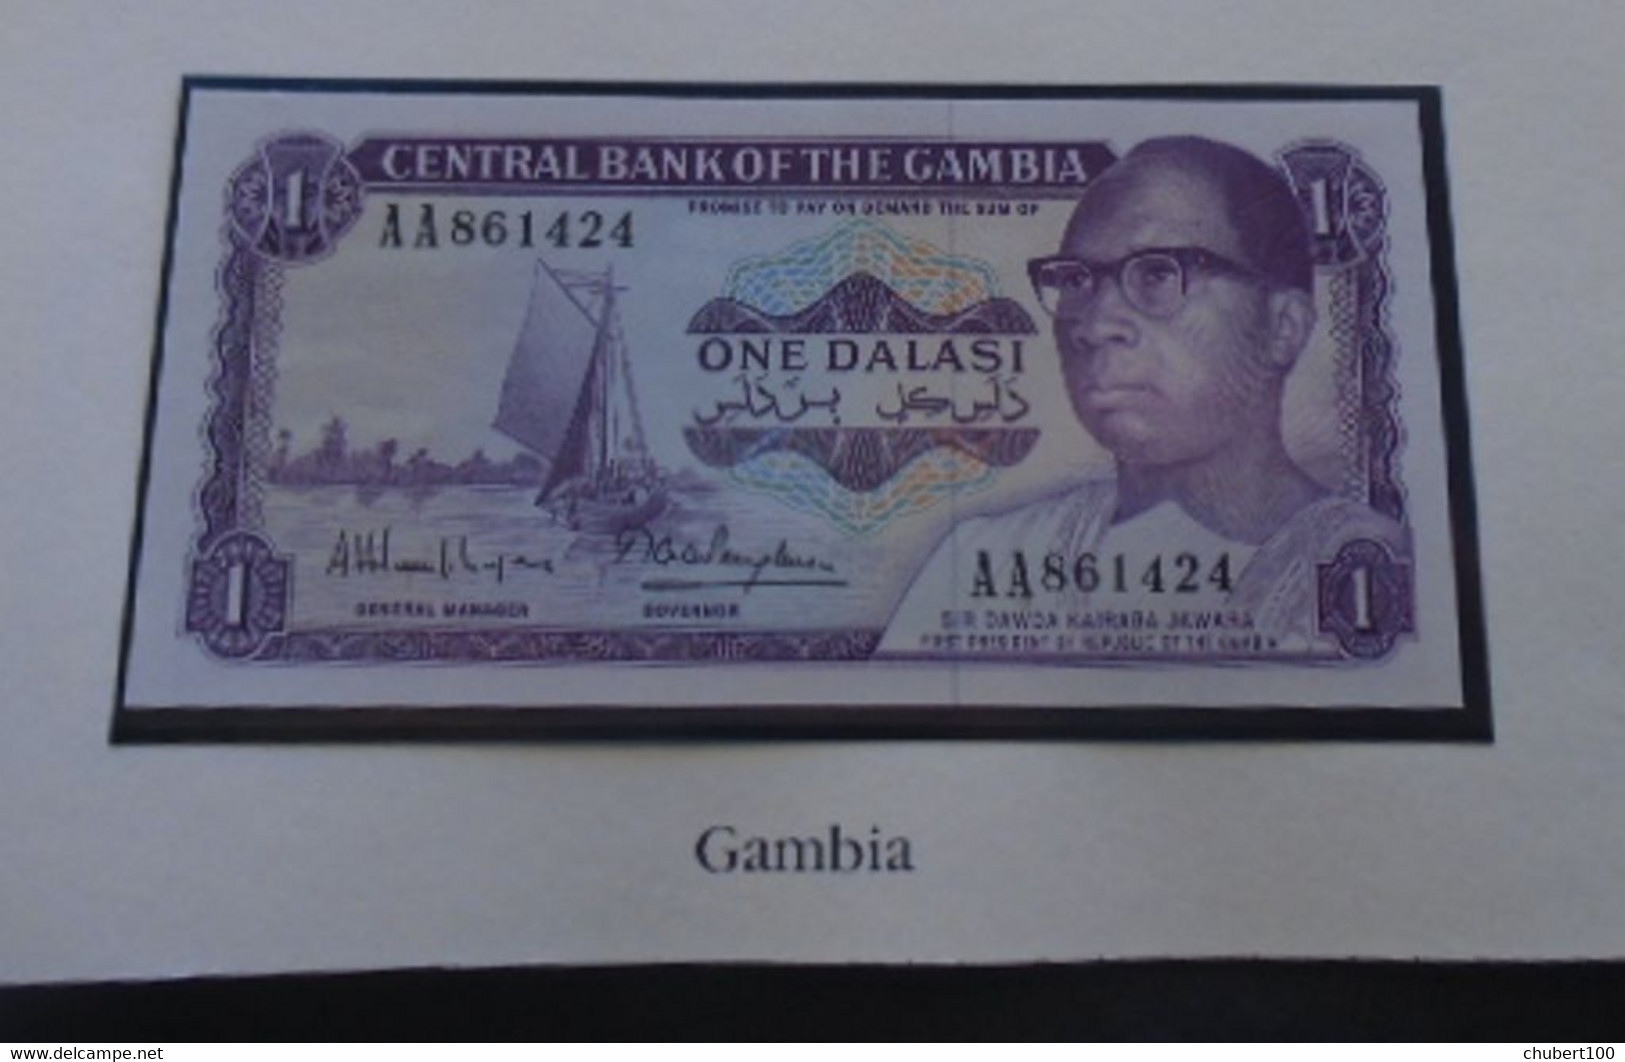 GAMBIA , P 4f + 4g , 1 Dalasi , ND 1972 - 1986, UNC  Neuf , 3 Notes - Gambia